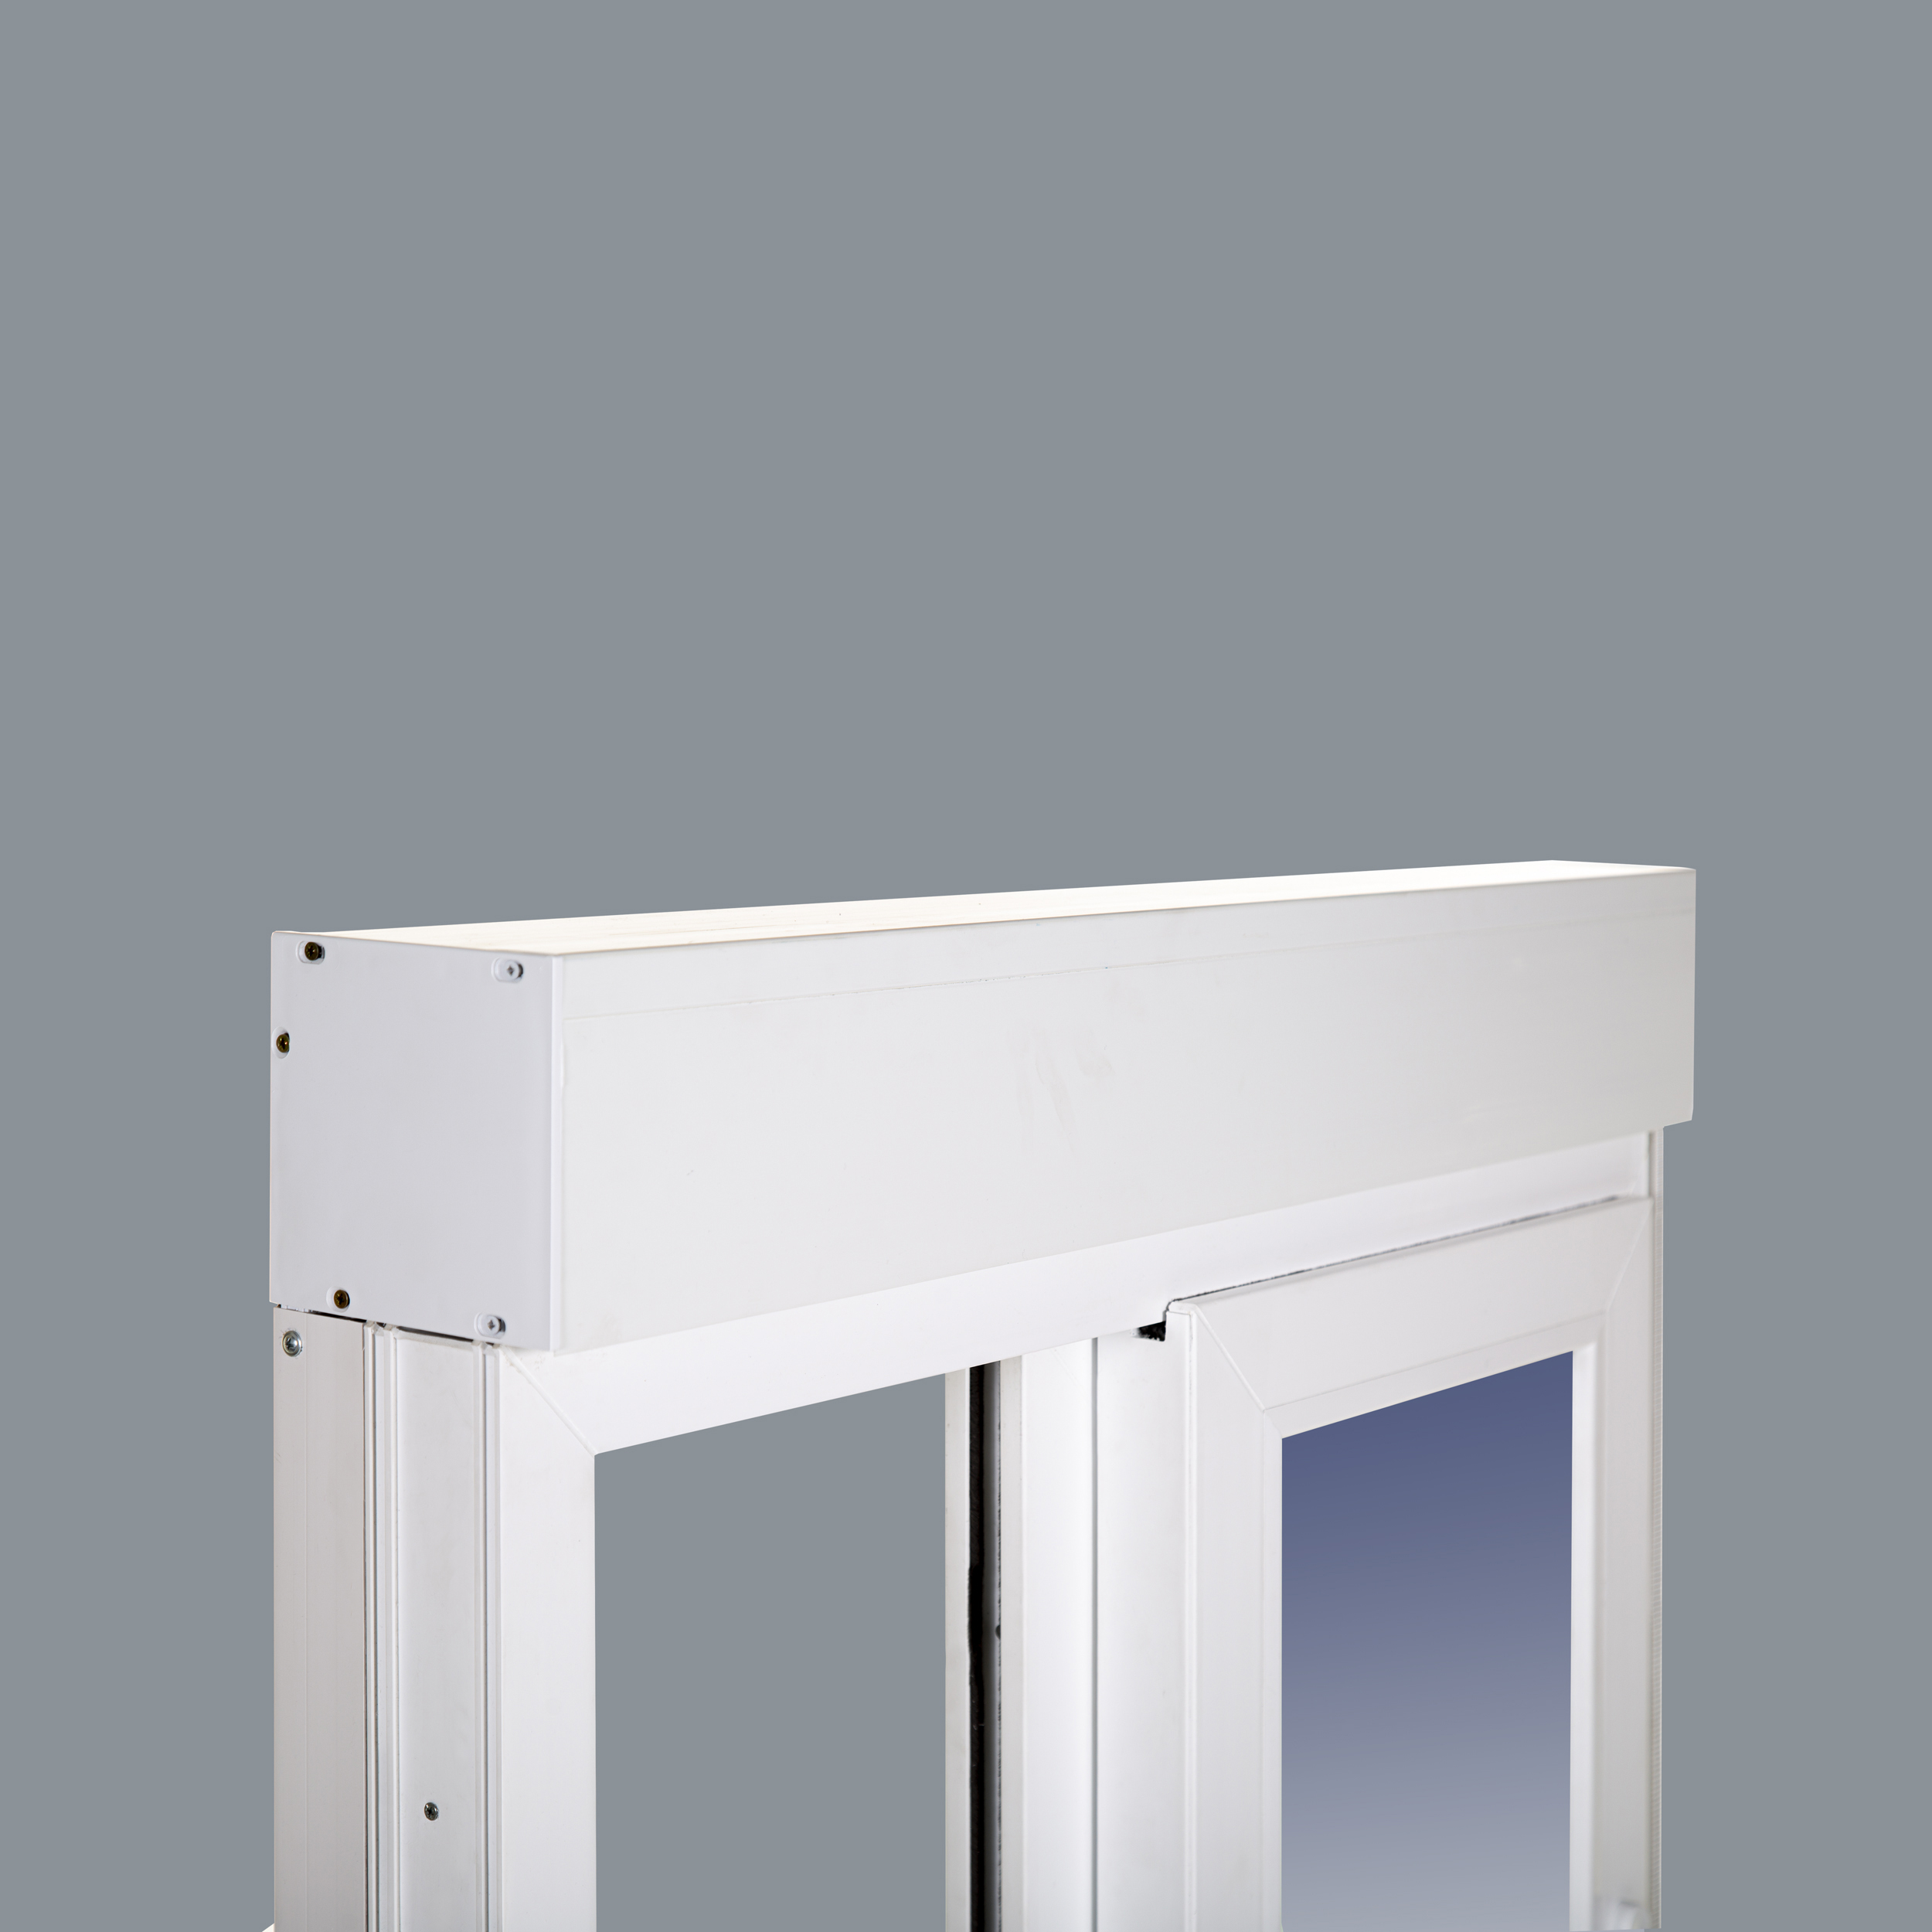 Ventana PVC blanca 1000x1150 mm izda con persiana